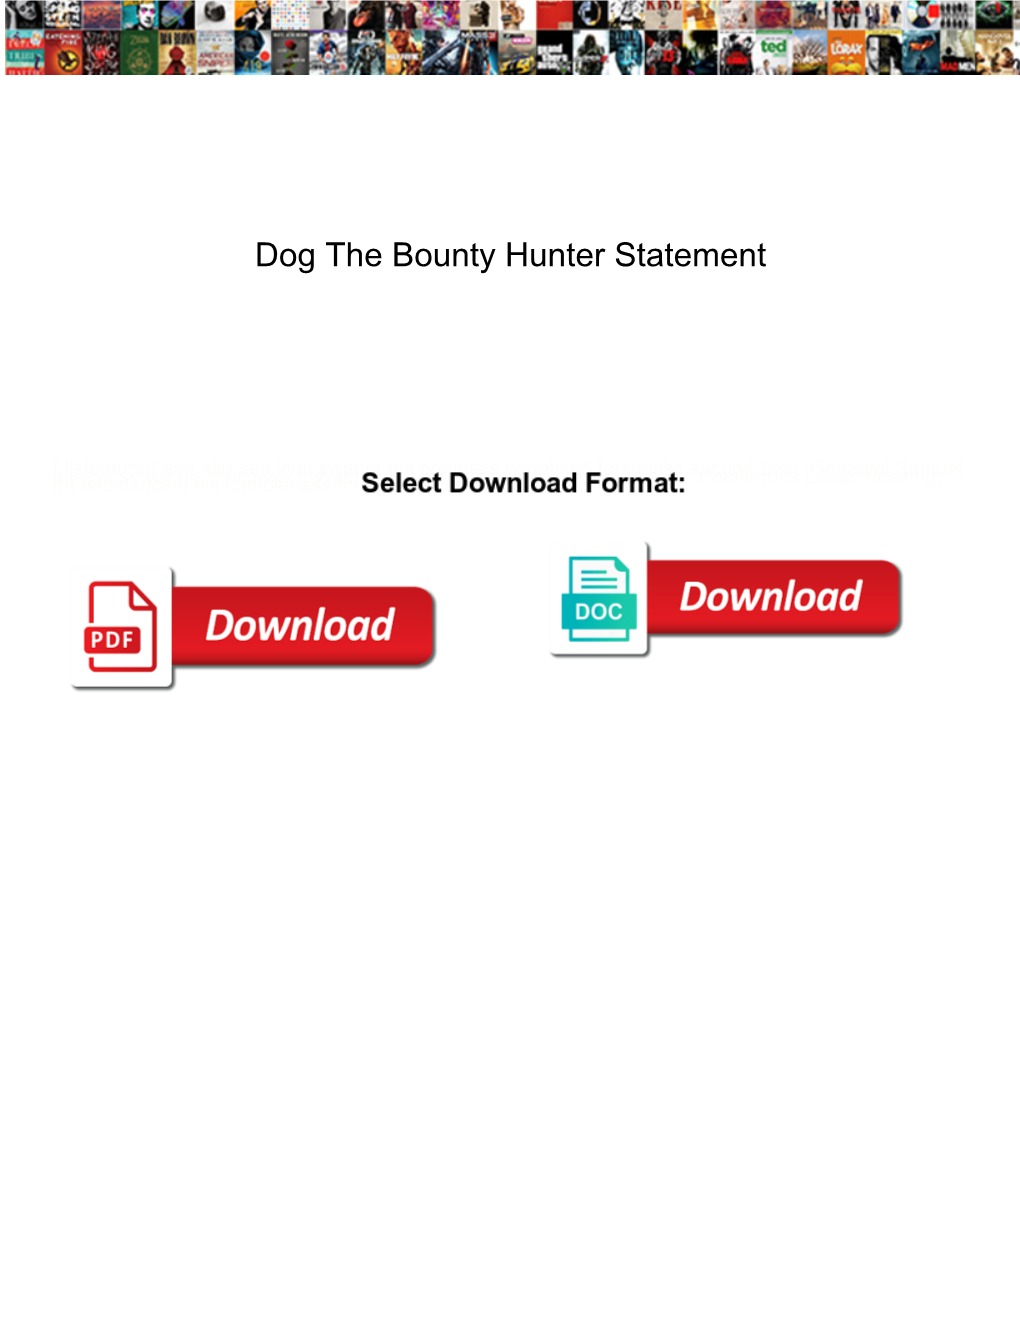 Dog the Bounty Hunter Statement